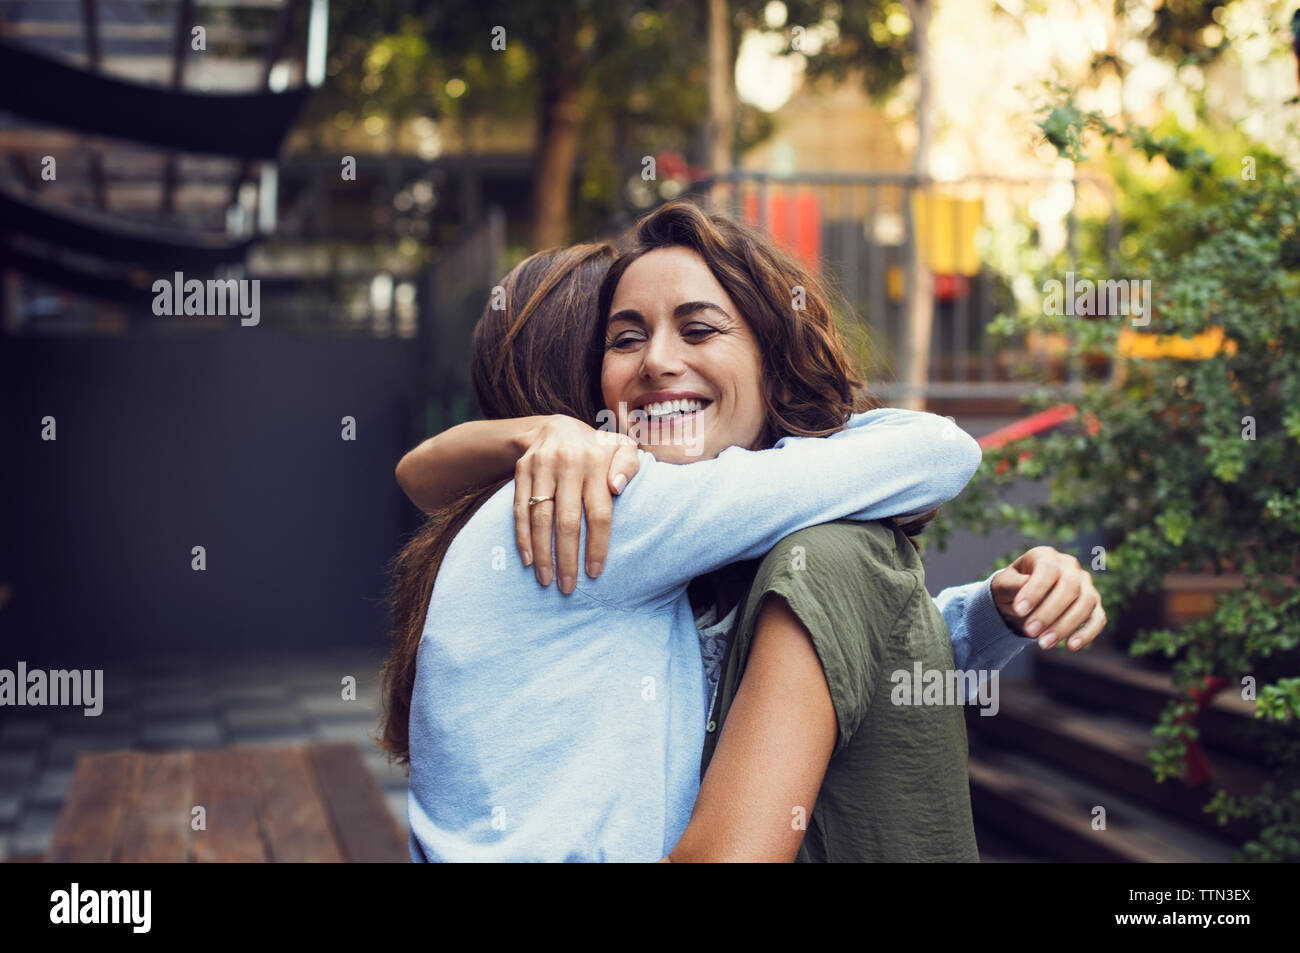 Affectionate mature women embracing at sidewalk cafe Stock Photo